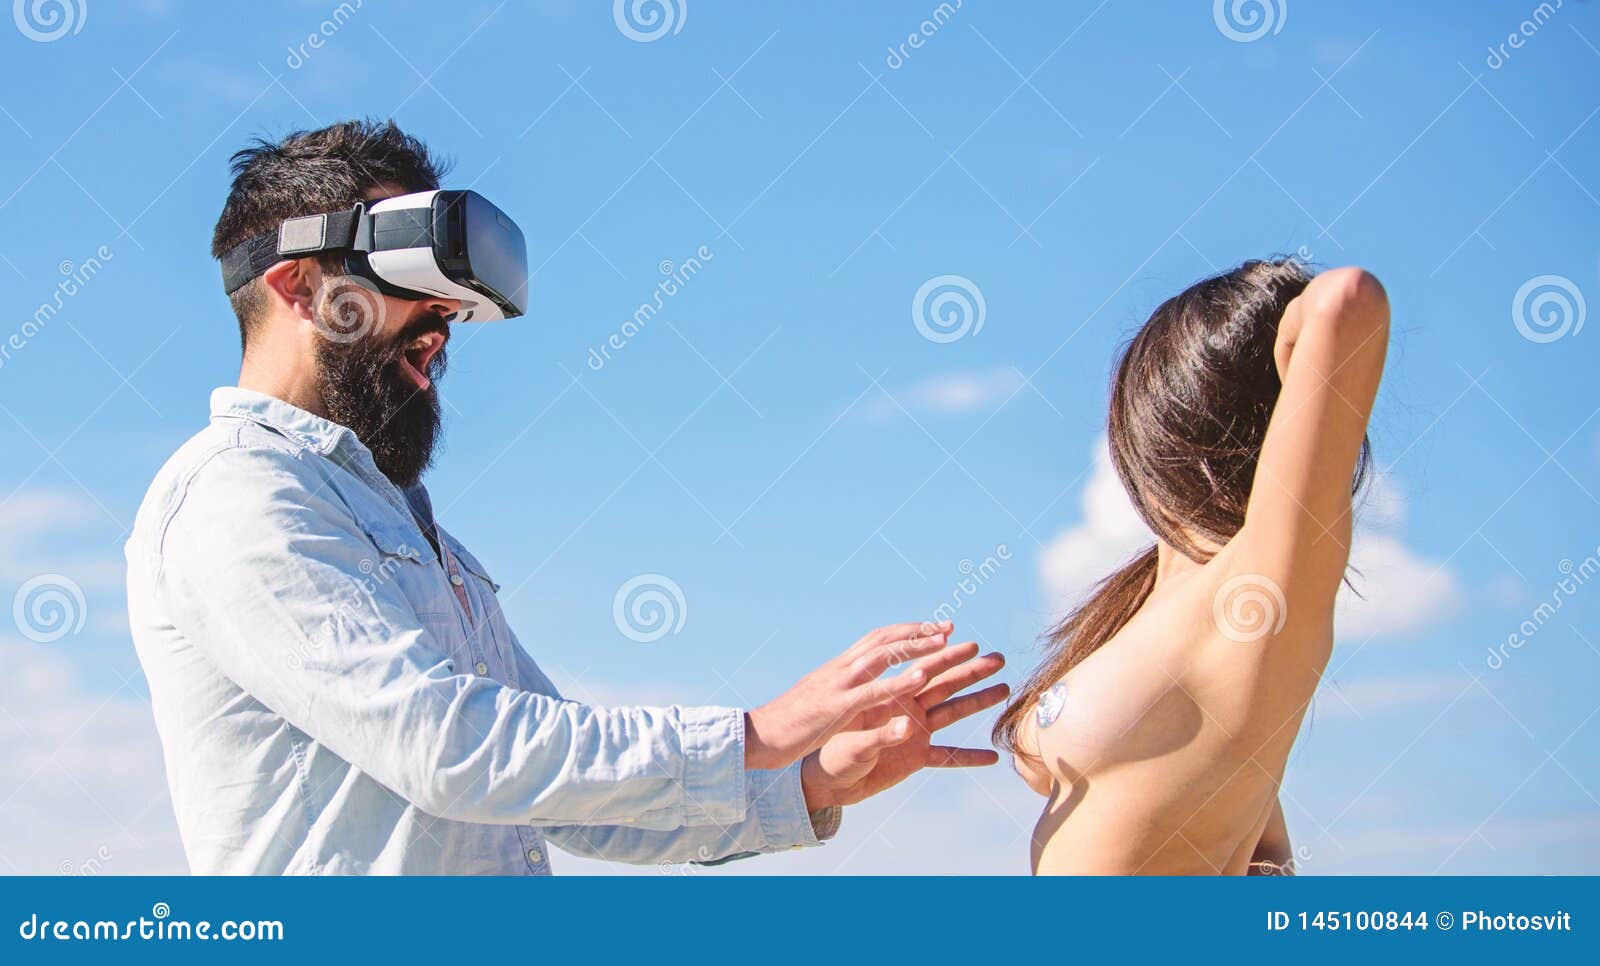 Virtual Girl Sex Game